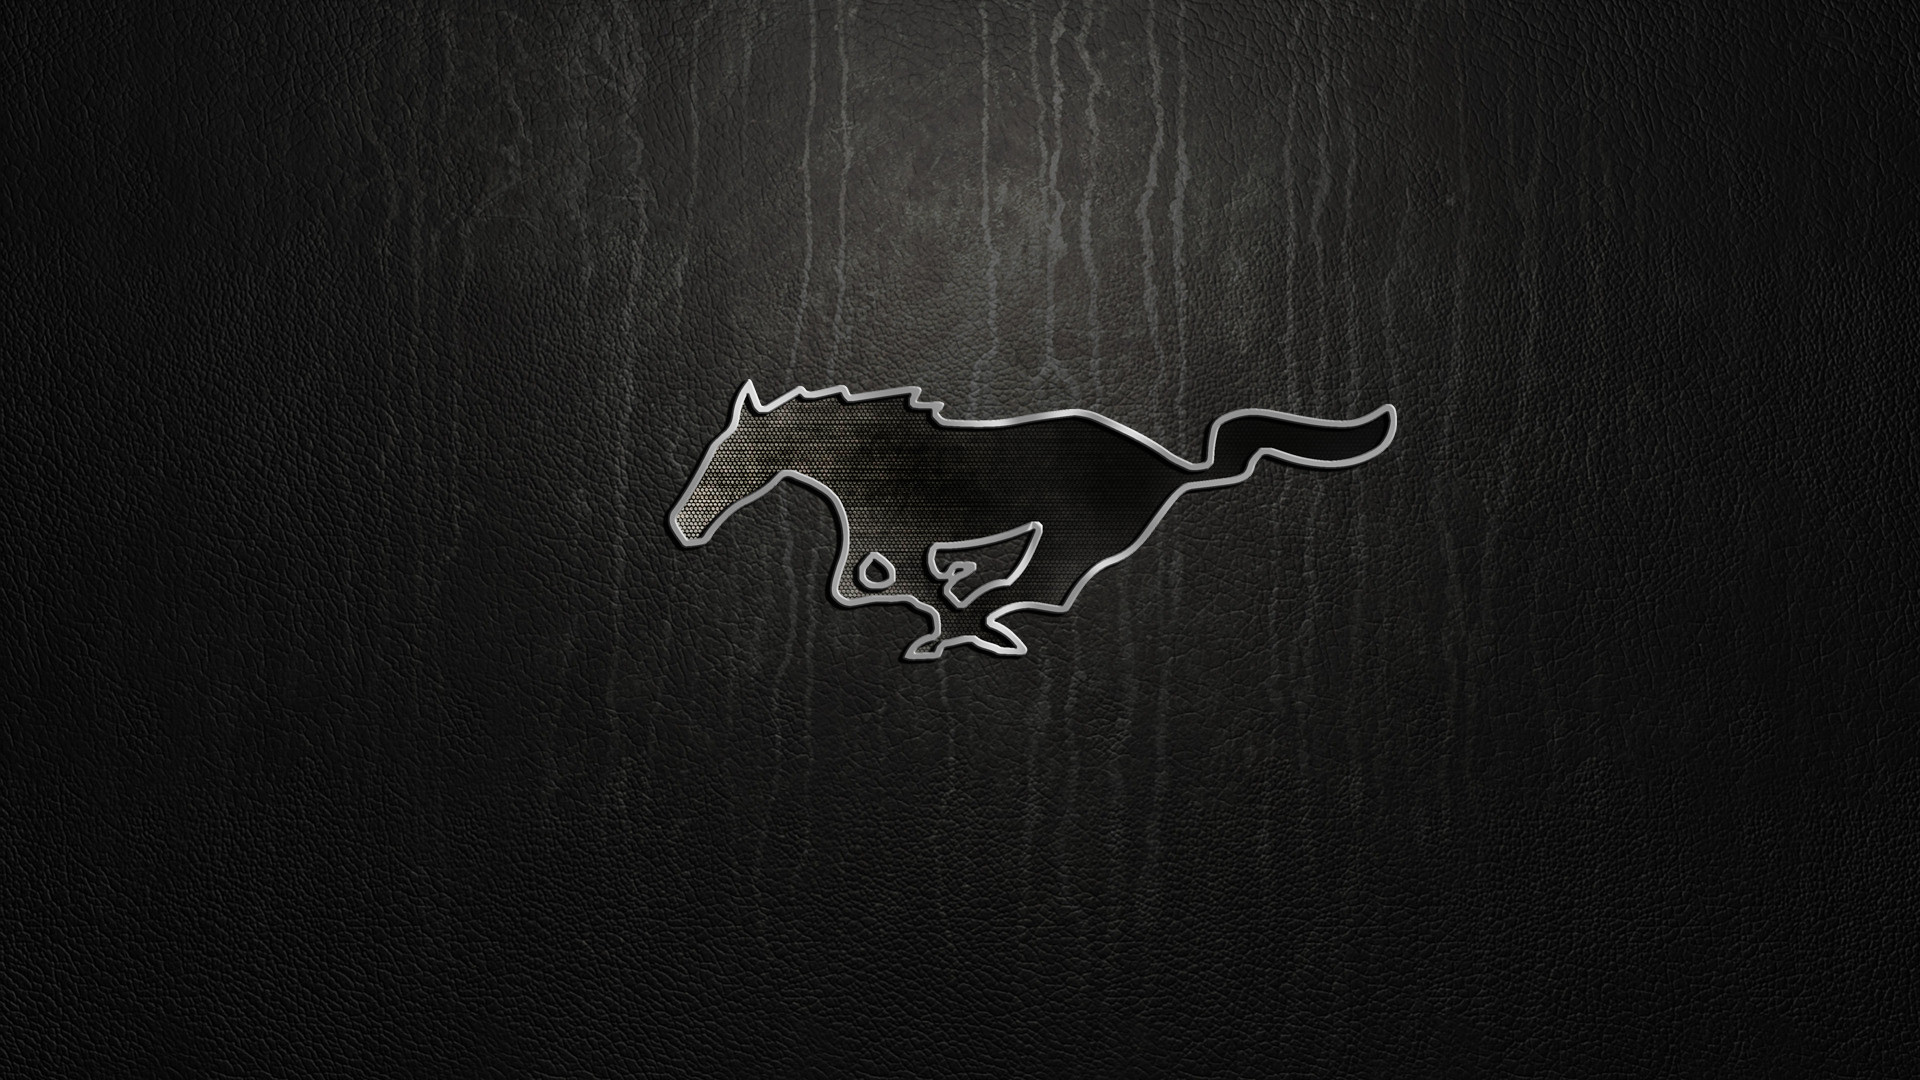 Mustang Wallpapers Free HD Download 500 HQ  Unsplash